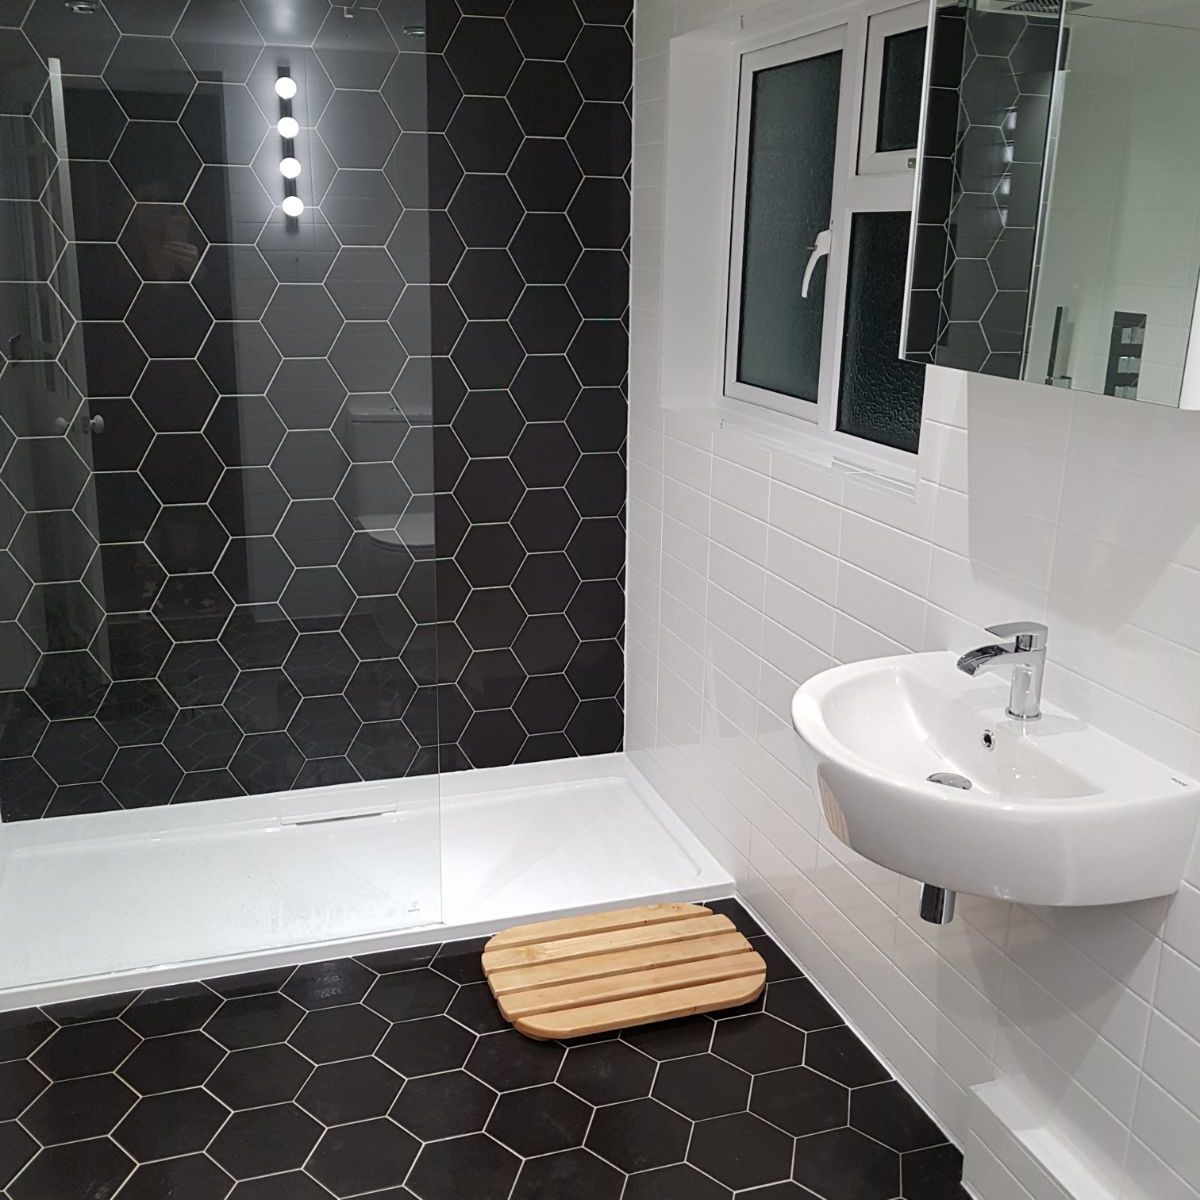 Hexagonal tiling in bathroom